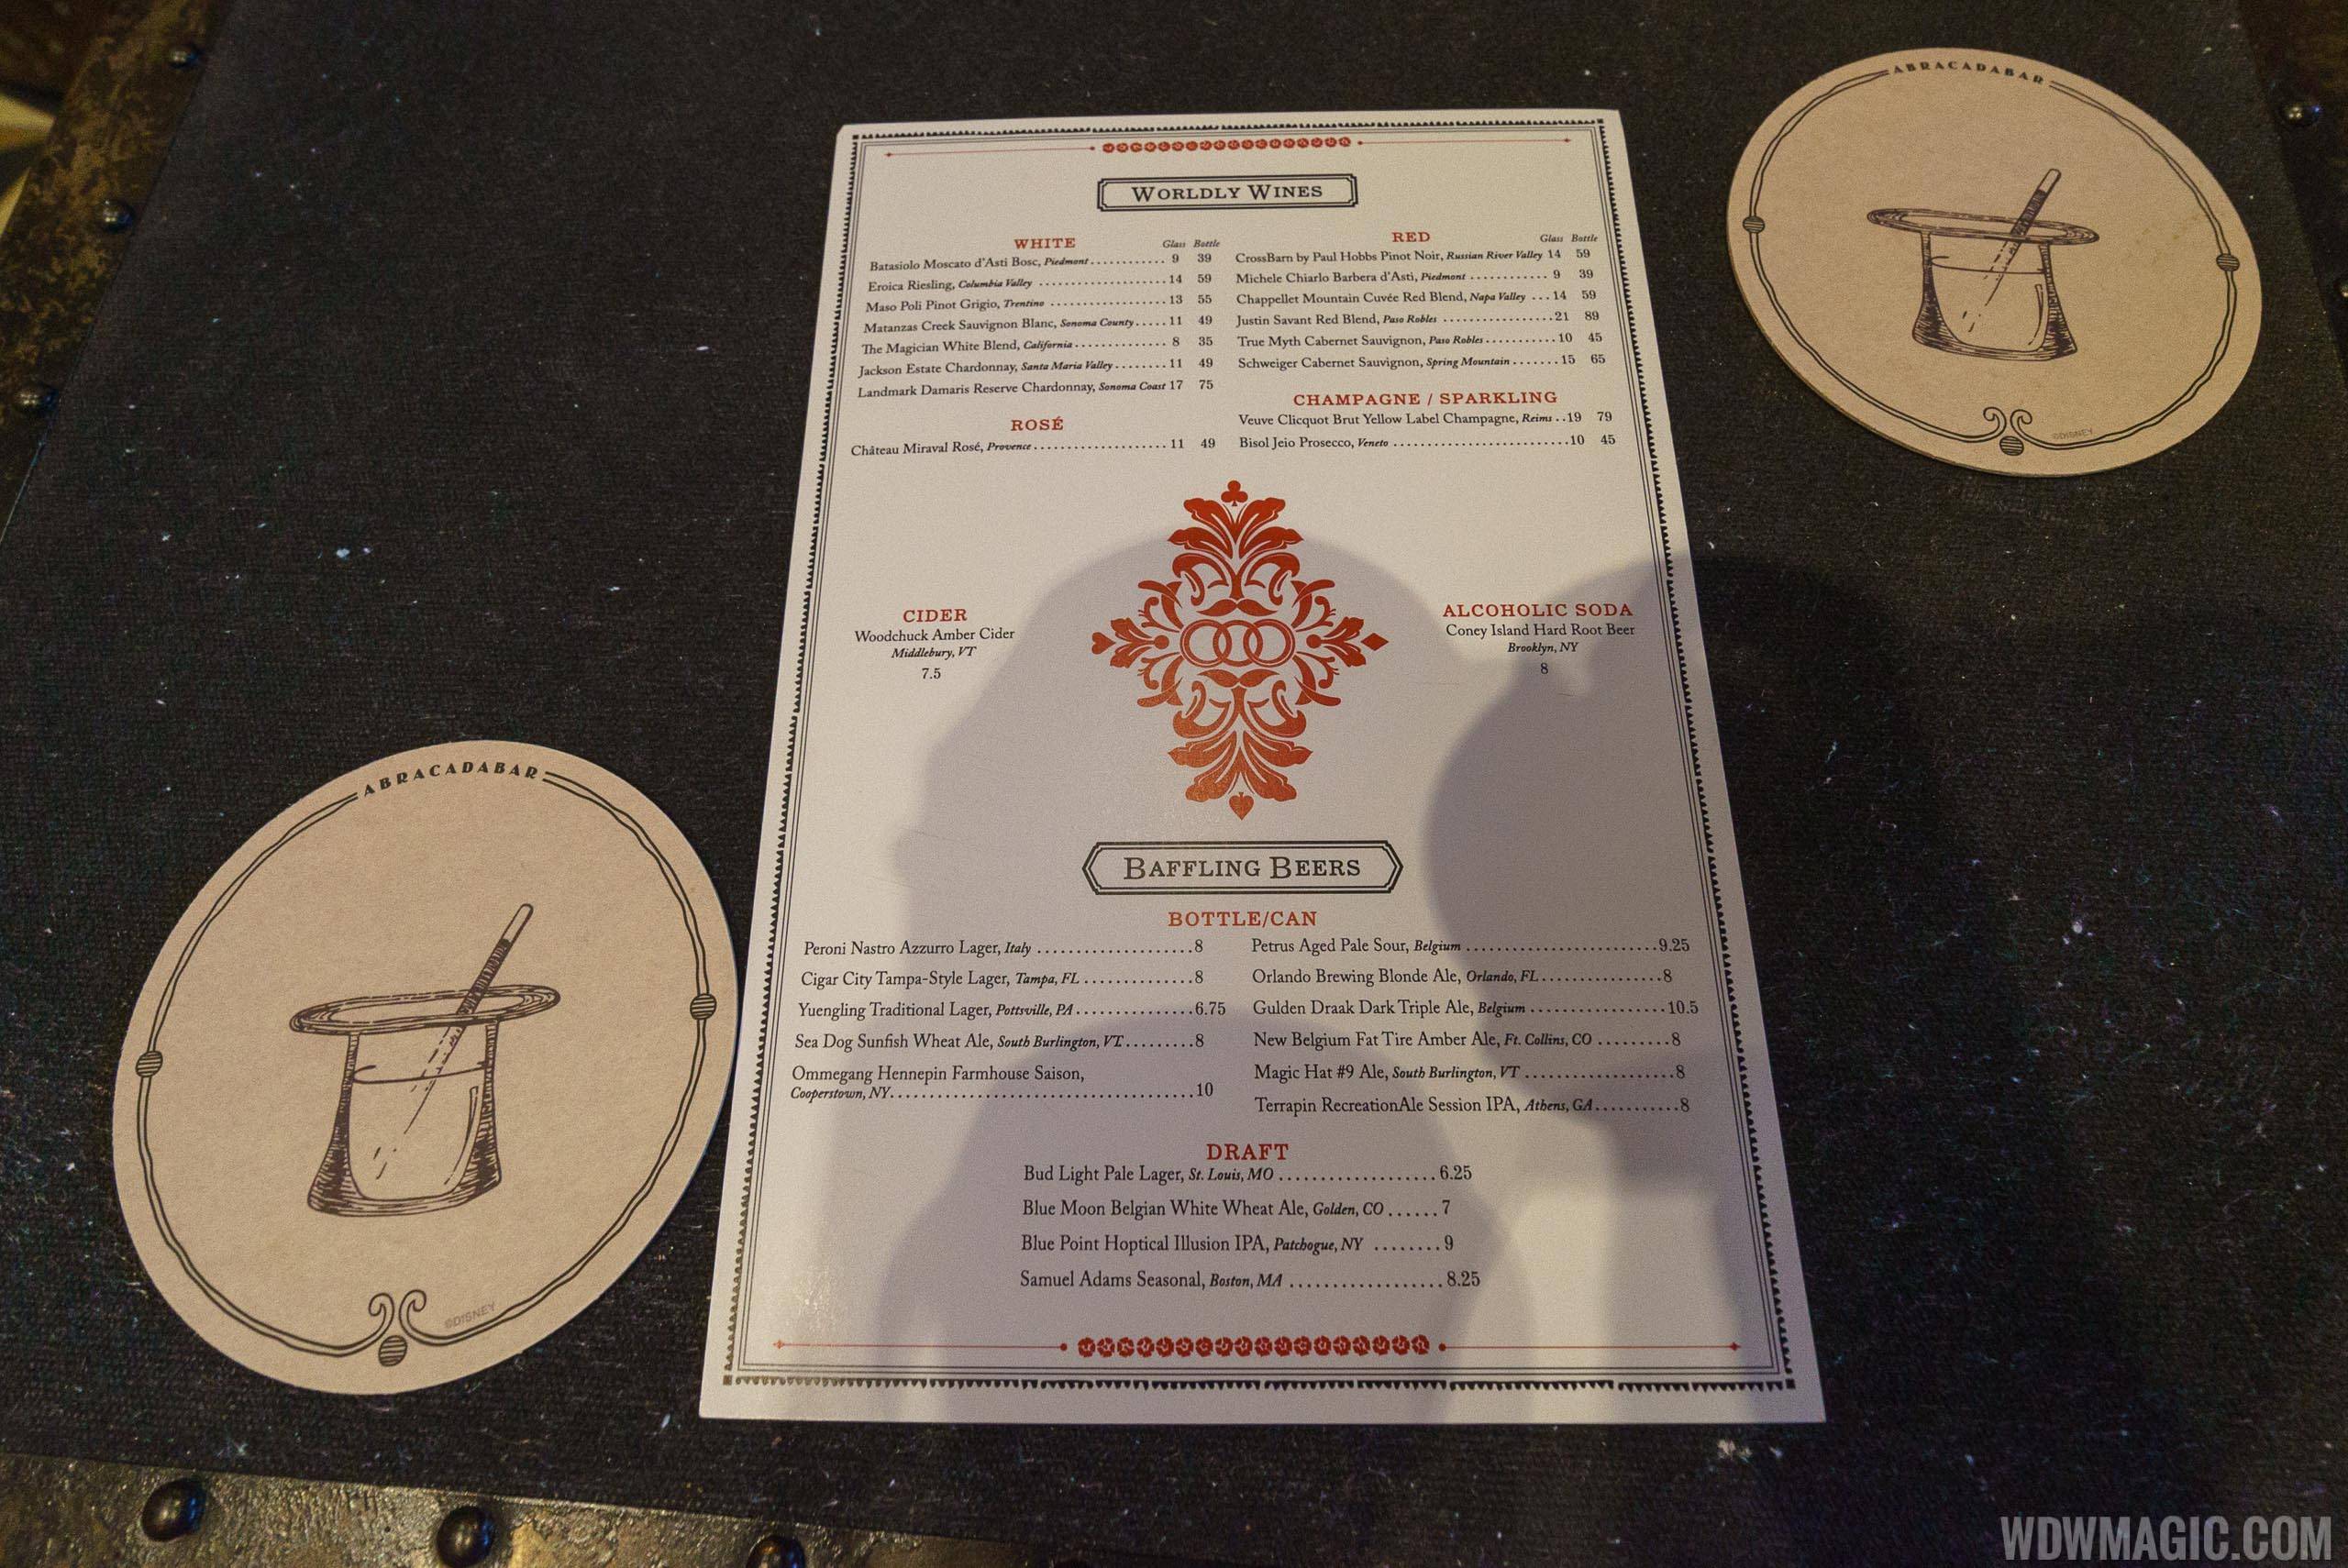 AbracadaBAR Wine and Beer menu